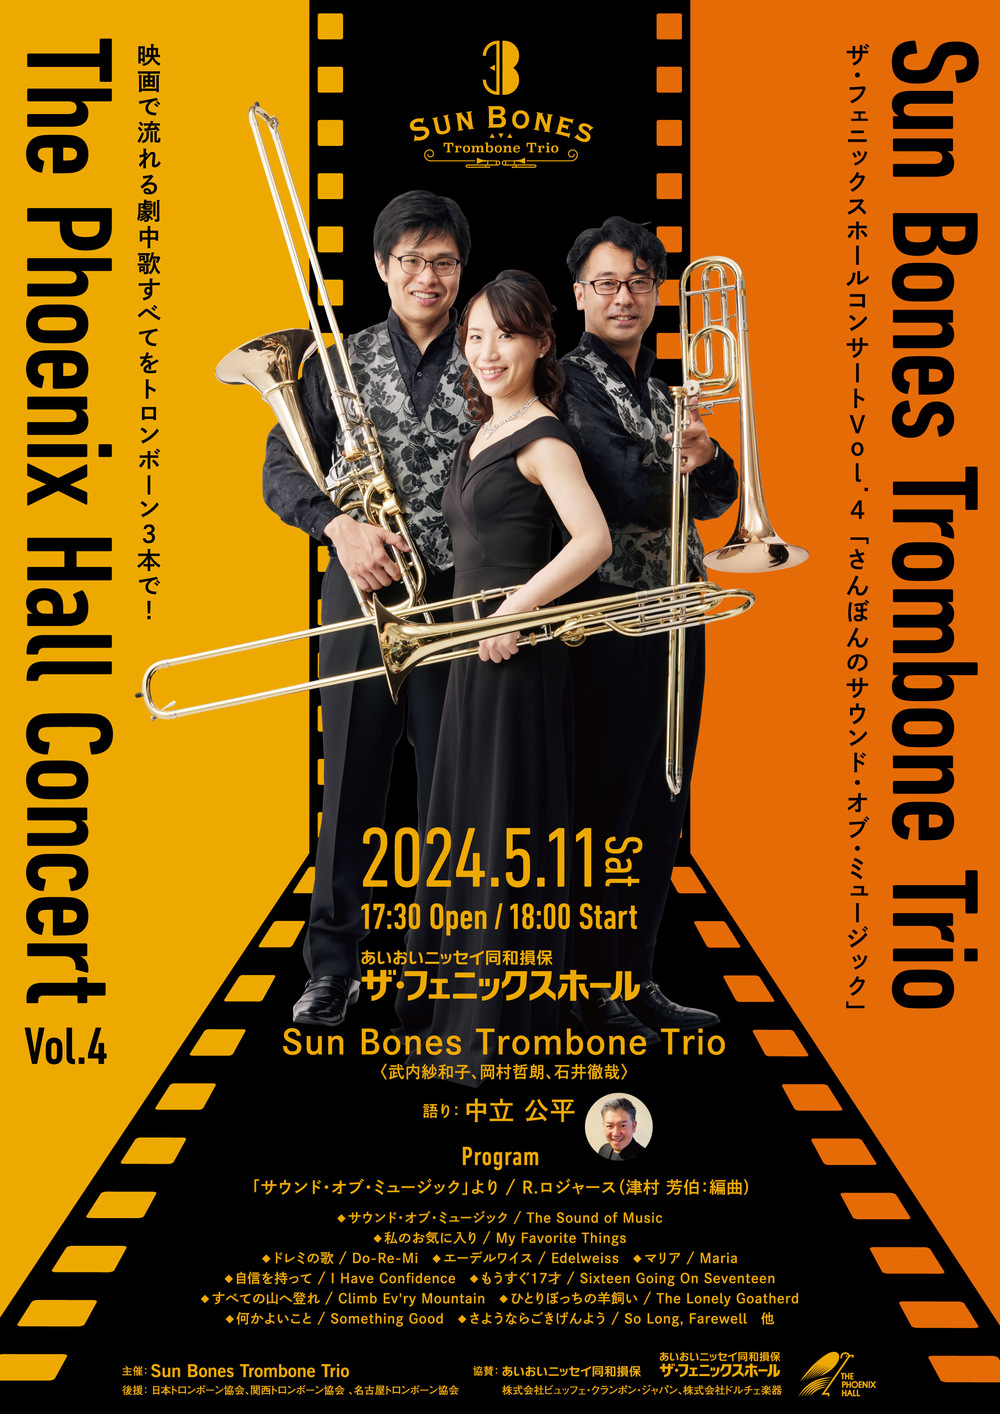 Sun Bones Trombone Trio ザ・フェニックスホールコンサートVol.4 